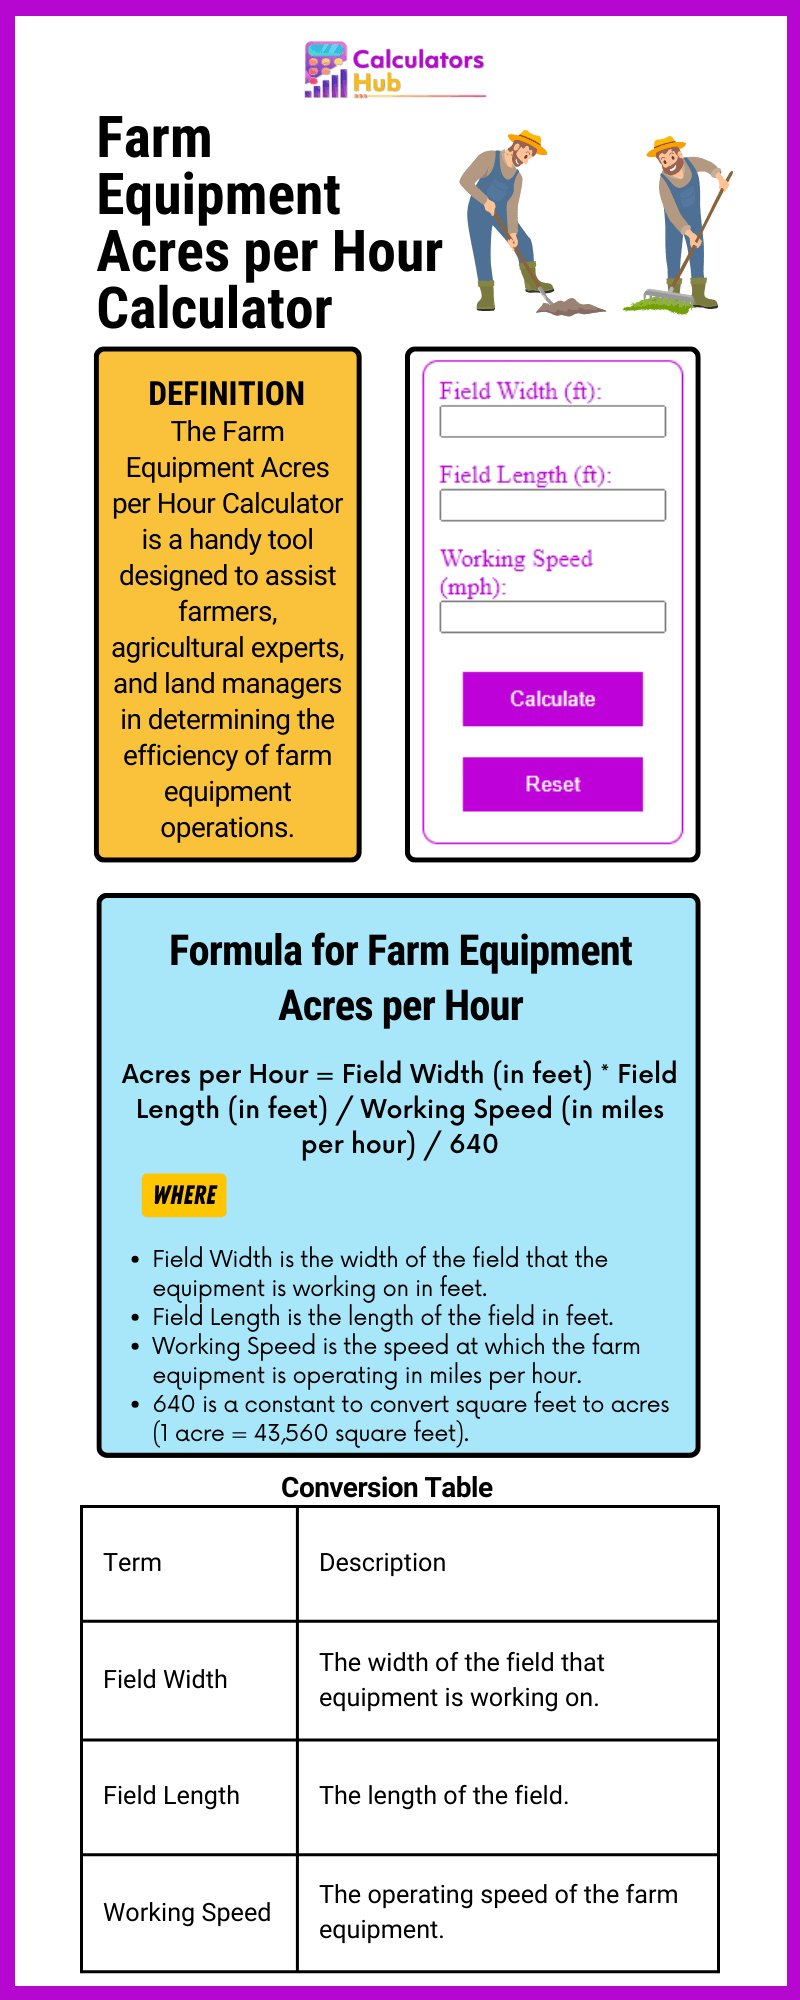 Farm Equipment Acres per Hour Calculator